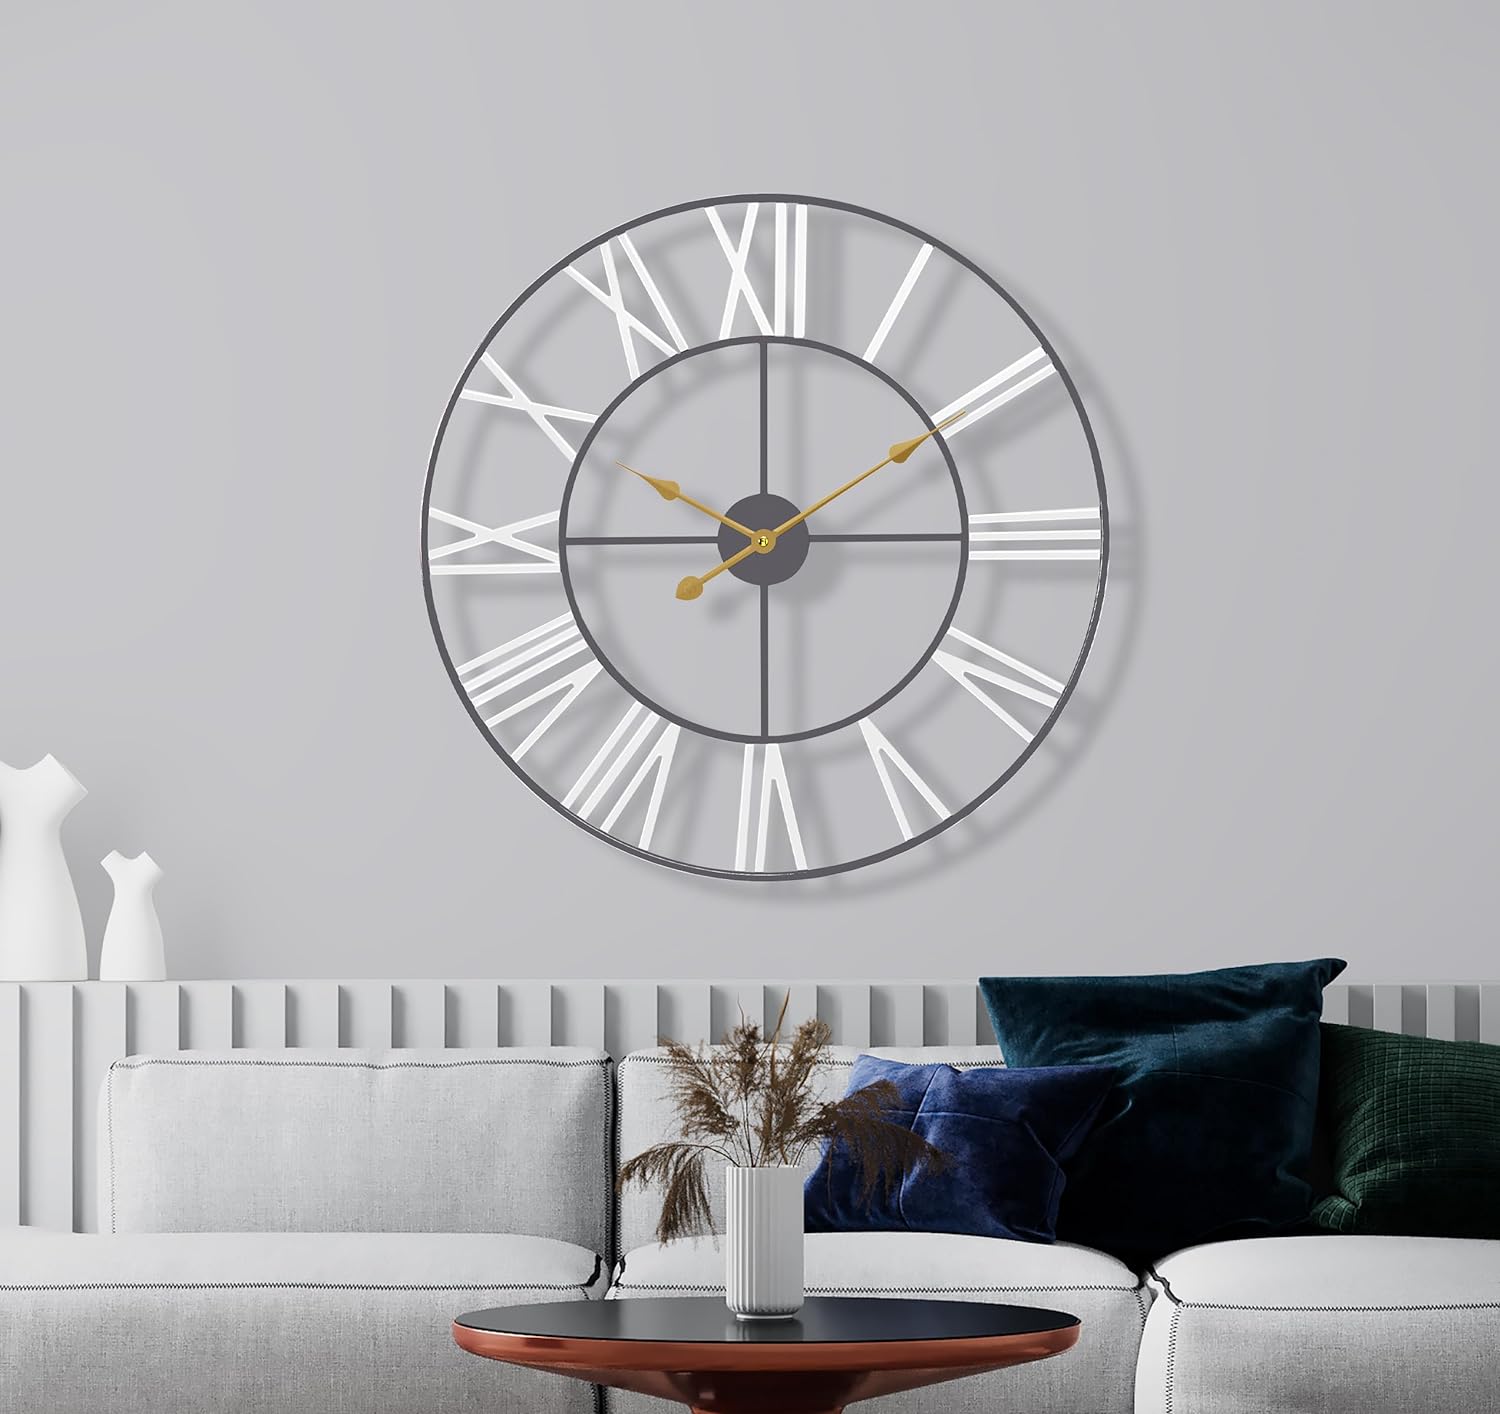 Sorbus Large Wall Clock for Living Room Decor, (60CM) 24 Inch Wall Clock Decorative, Metal Analog Roman Numeral Wall Clock Modern Wall Clocks - Large Clock Home Decor (White)